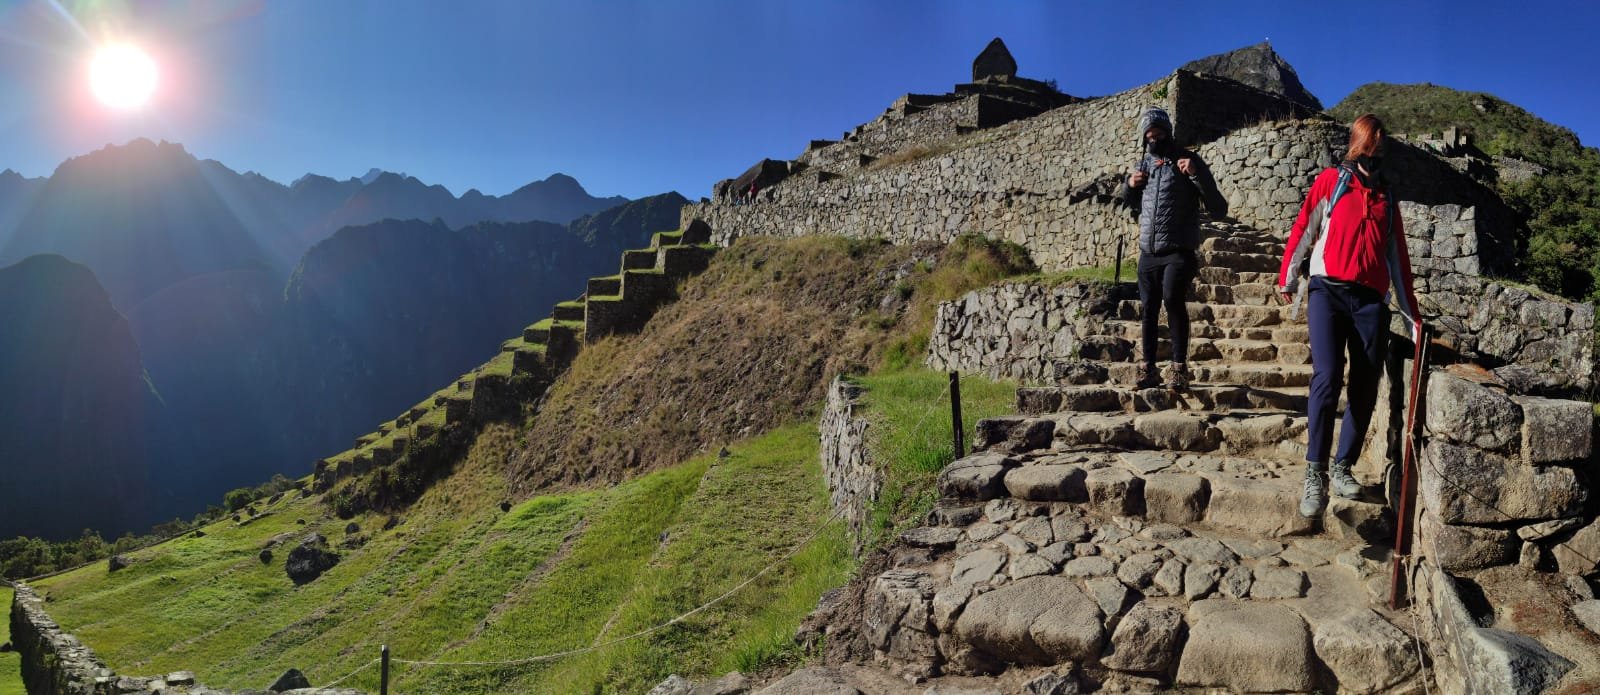 Inca Trail 4 days to Machu PicchuPhoto #4 